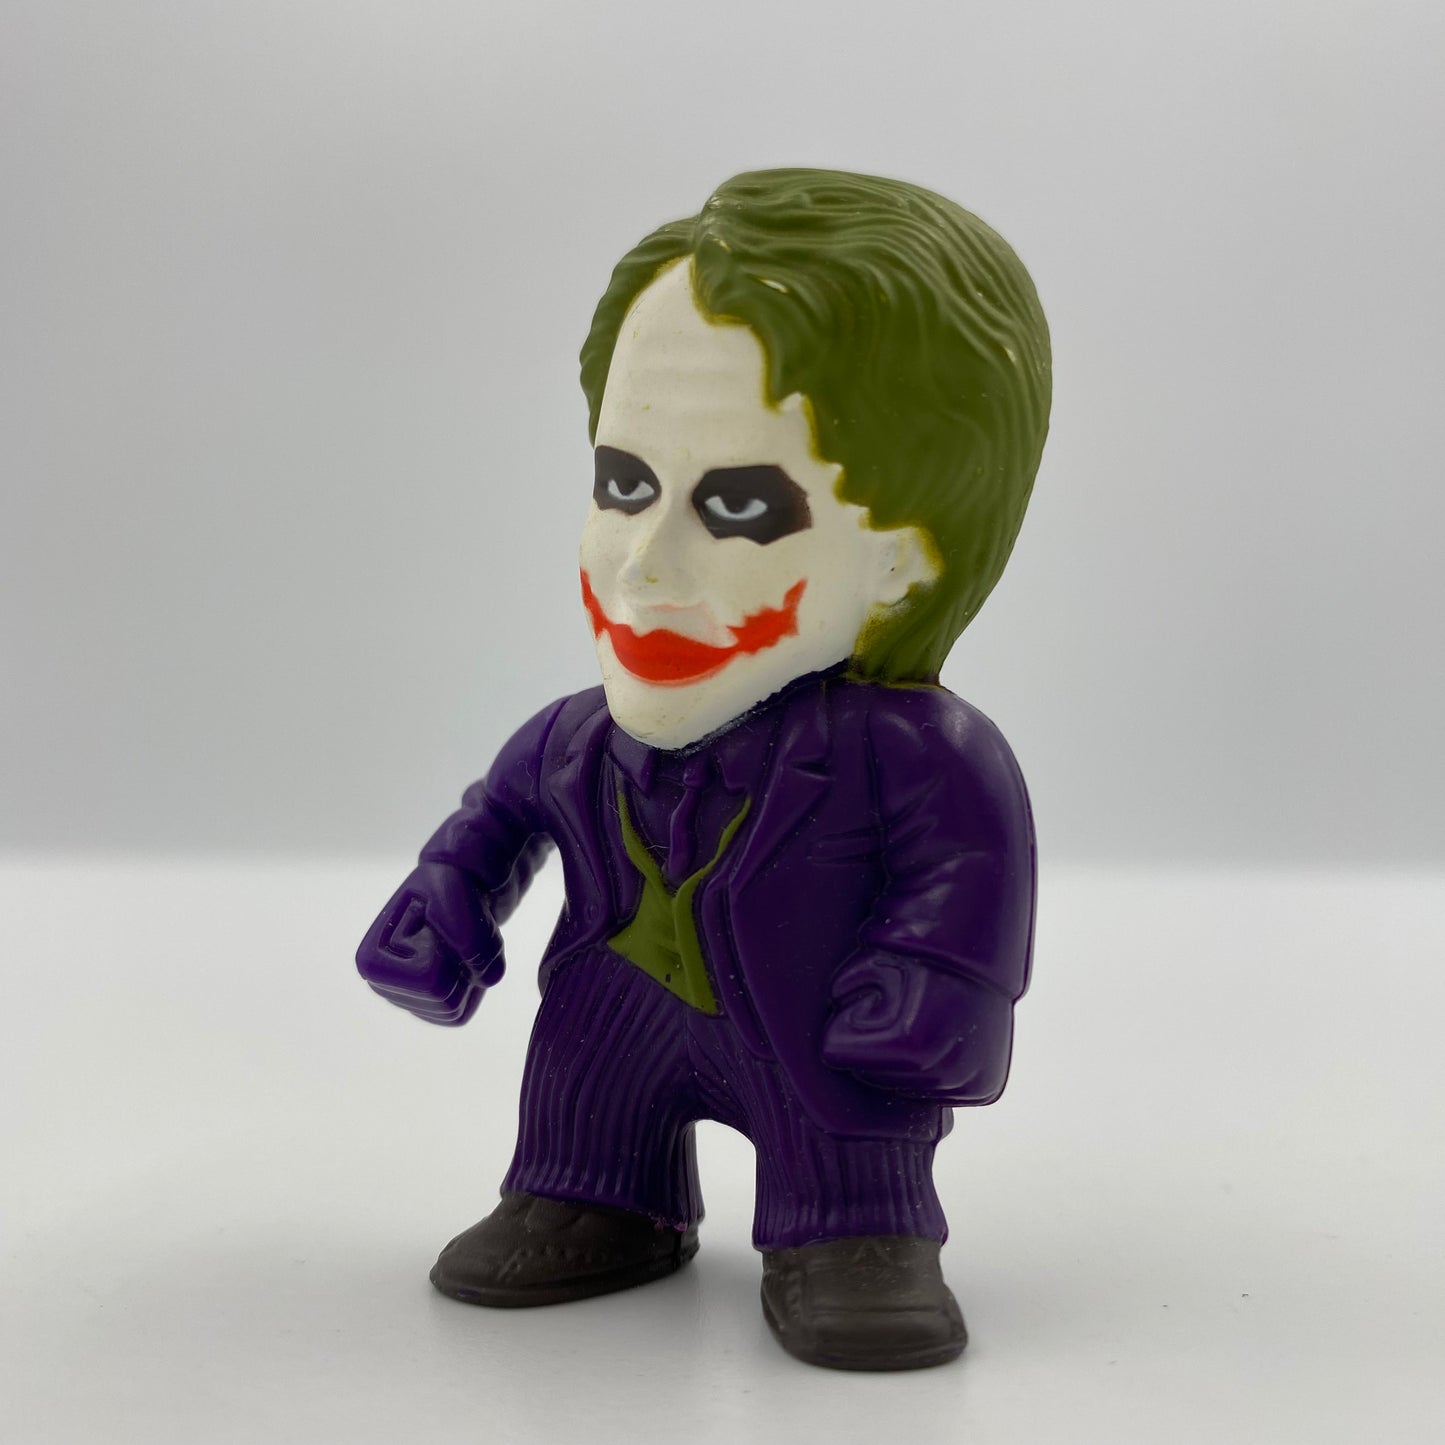 General Mills The Dark Knight Batman & Joker 2.5” stunt figures (2008) loose